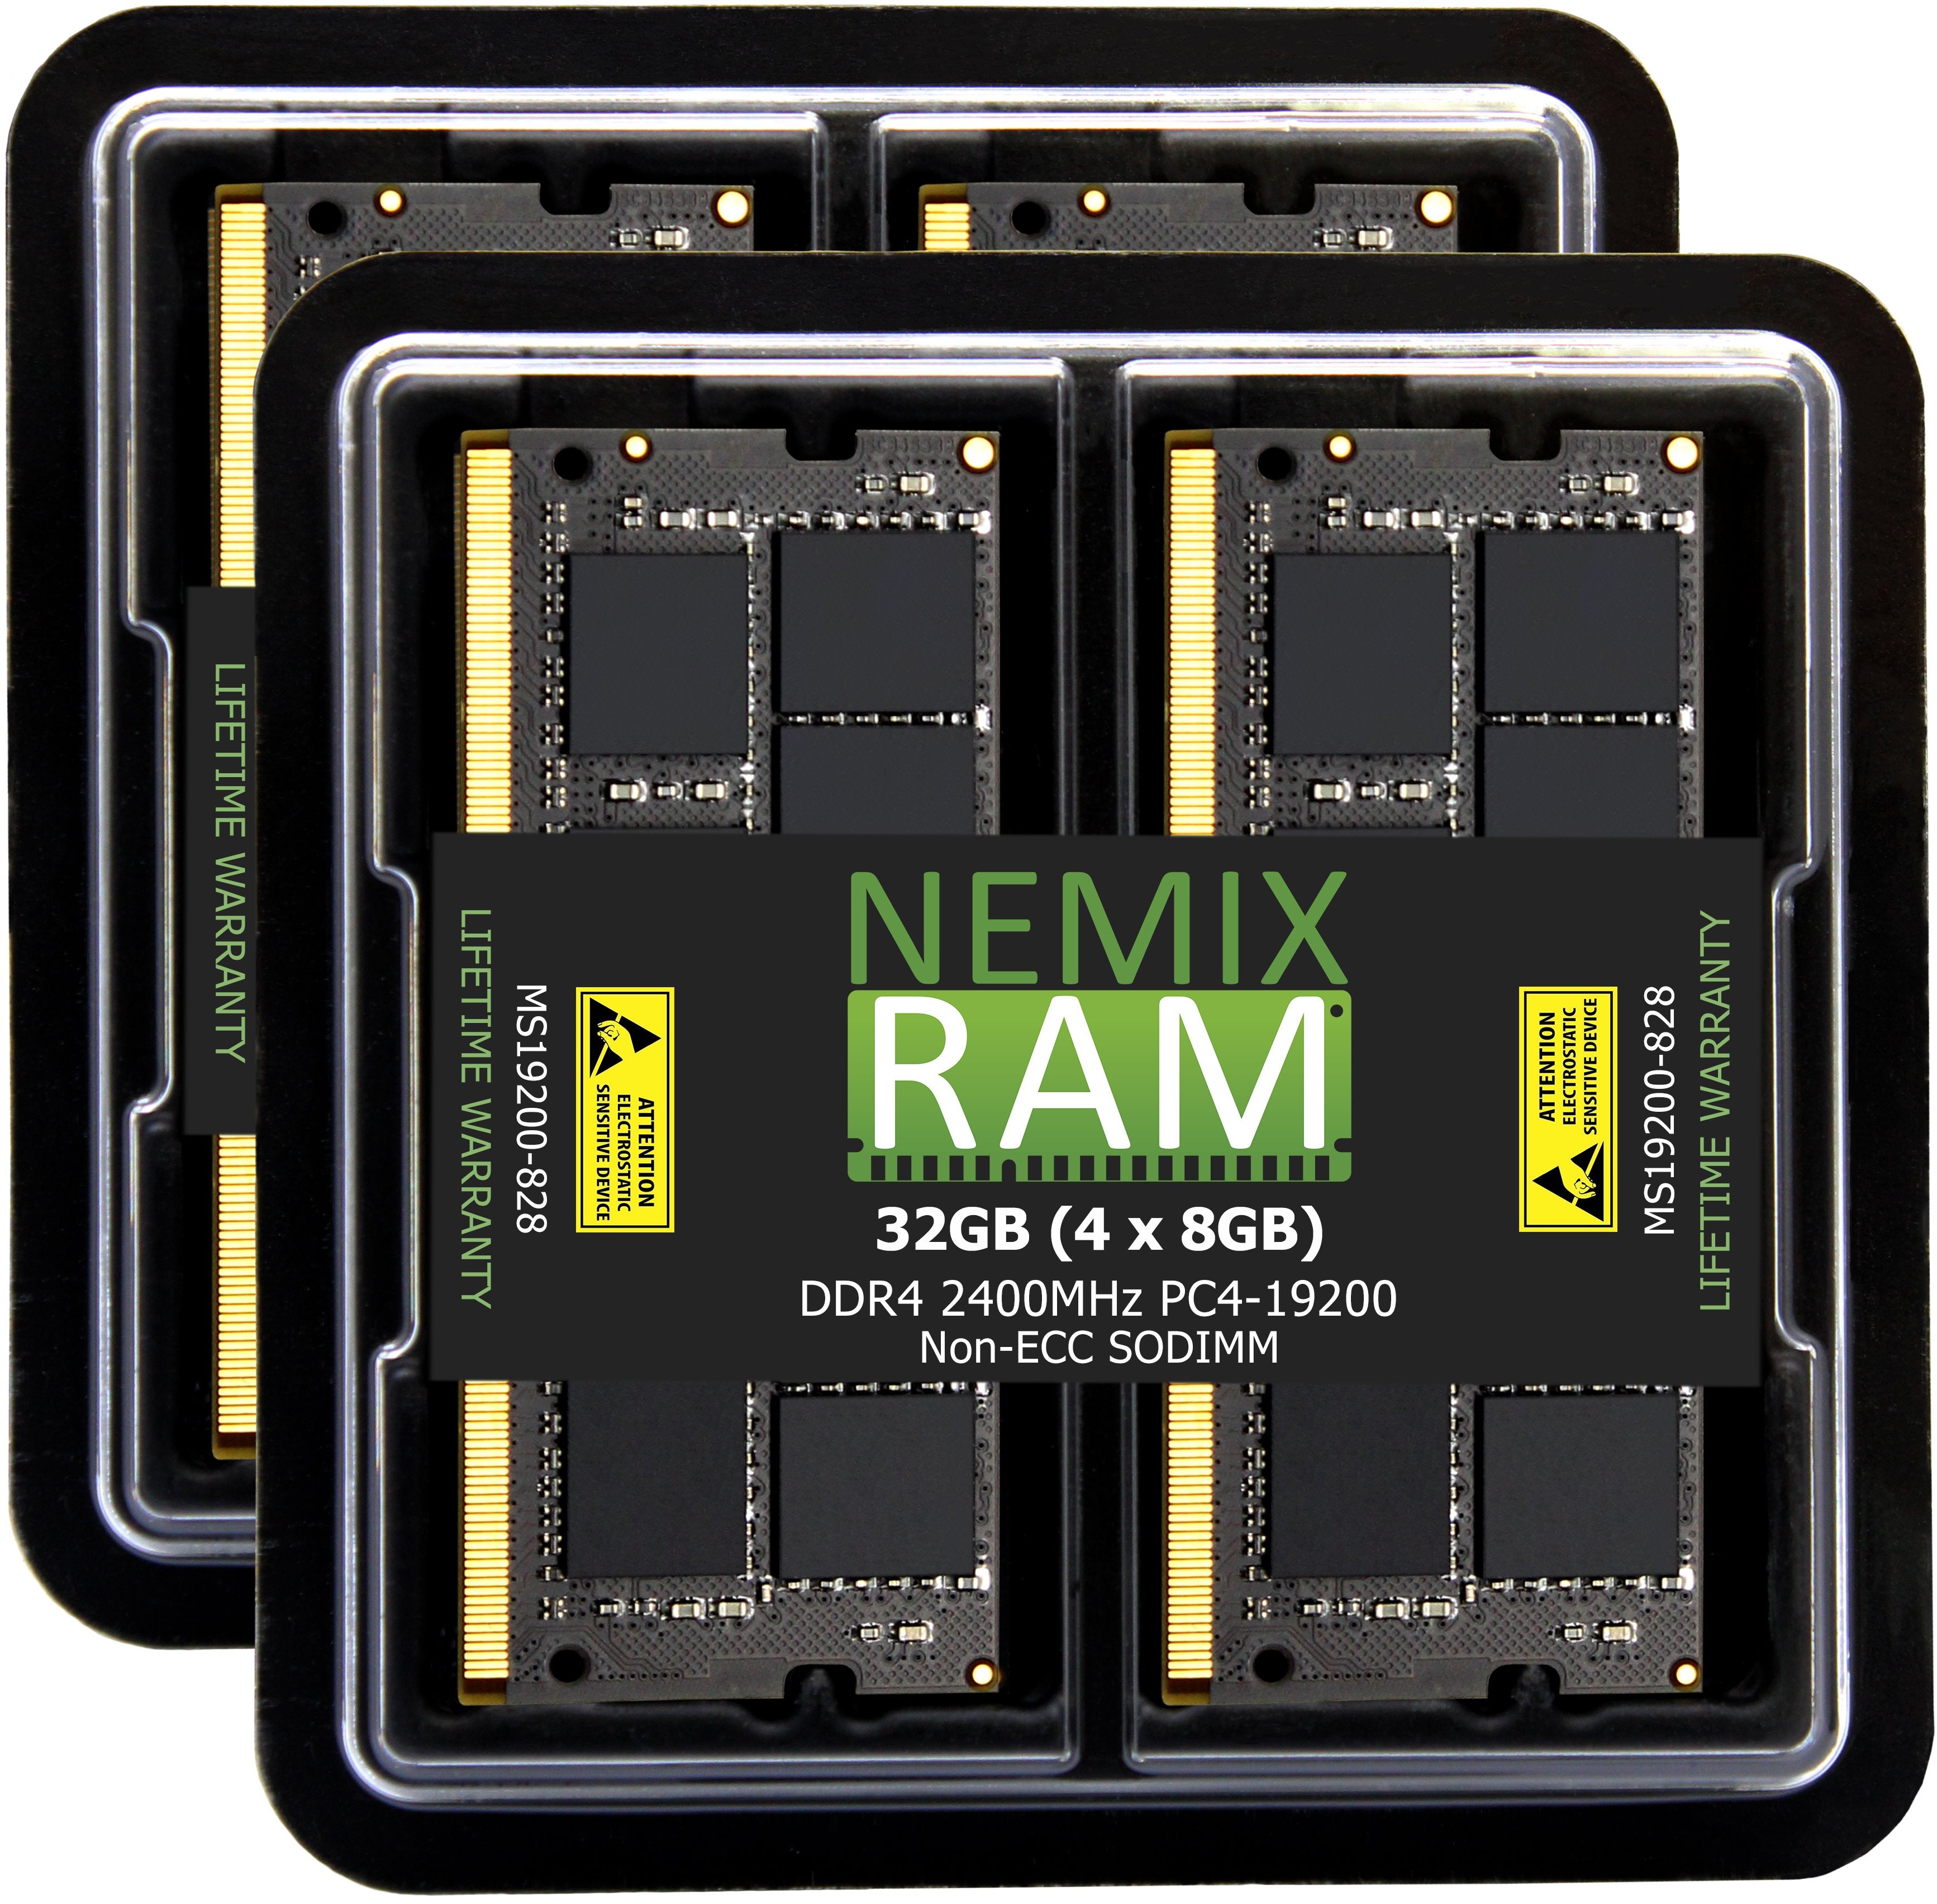 DDR4 2400MHz PC4-19200 for Apple iMac 2017 27-inch w/Retina 5K iMac 18,3